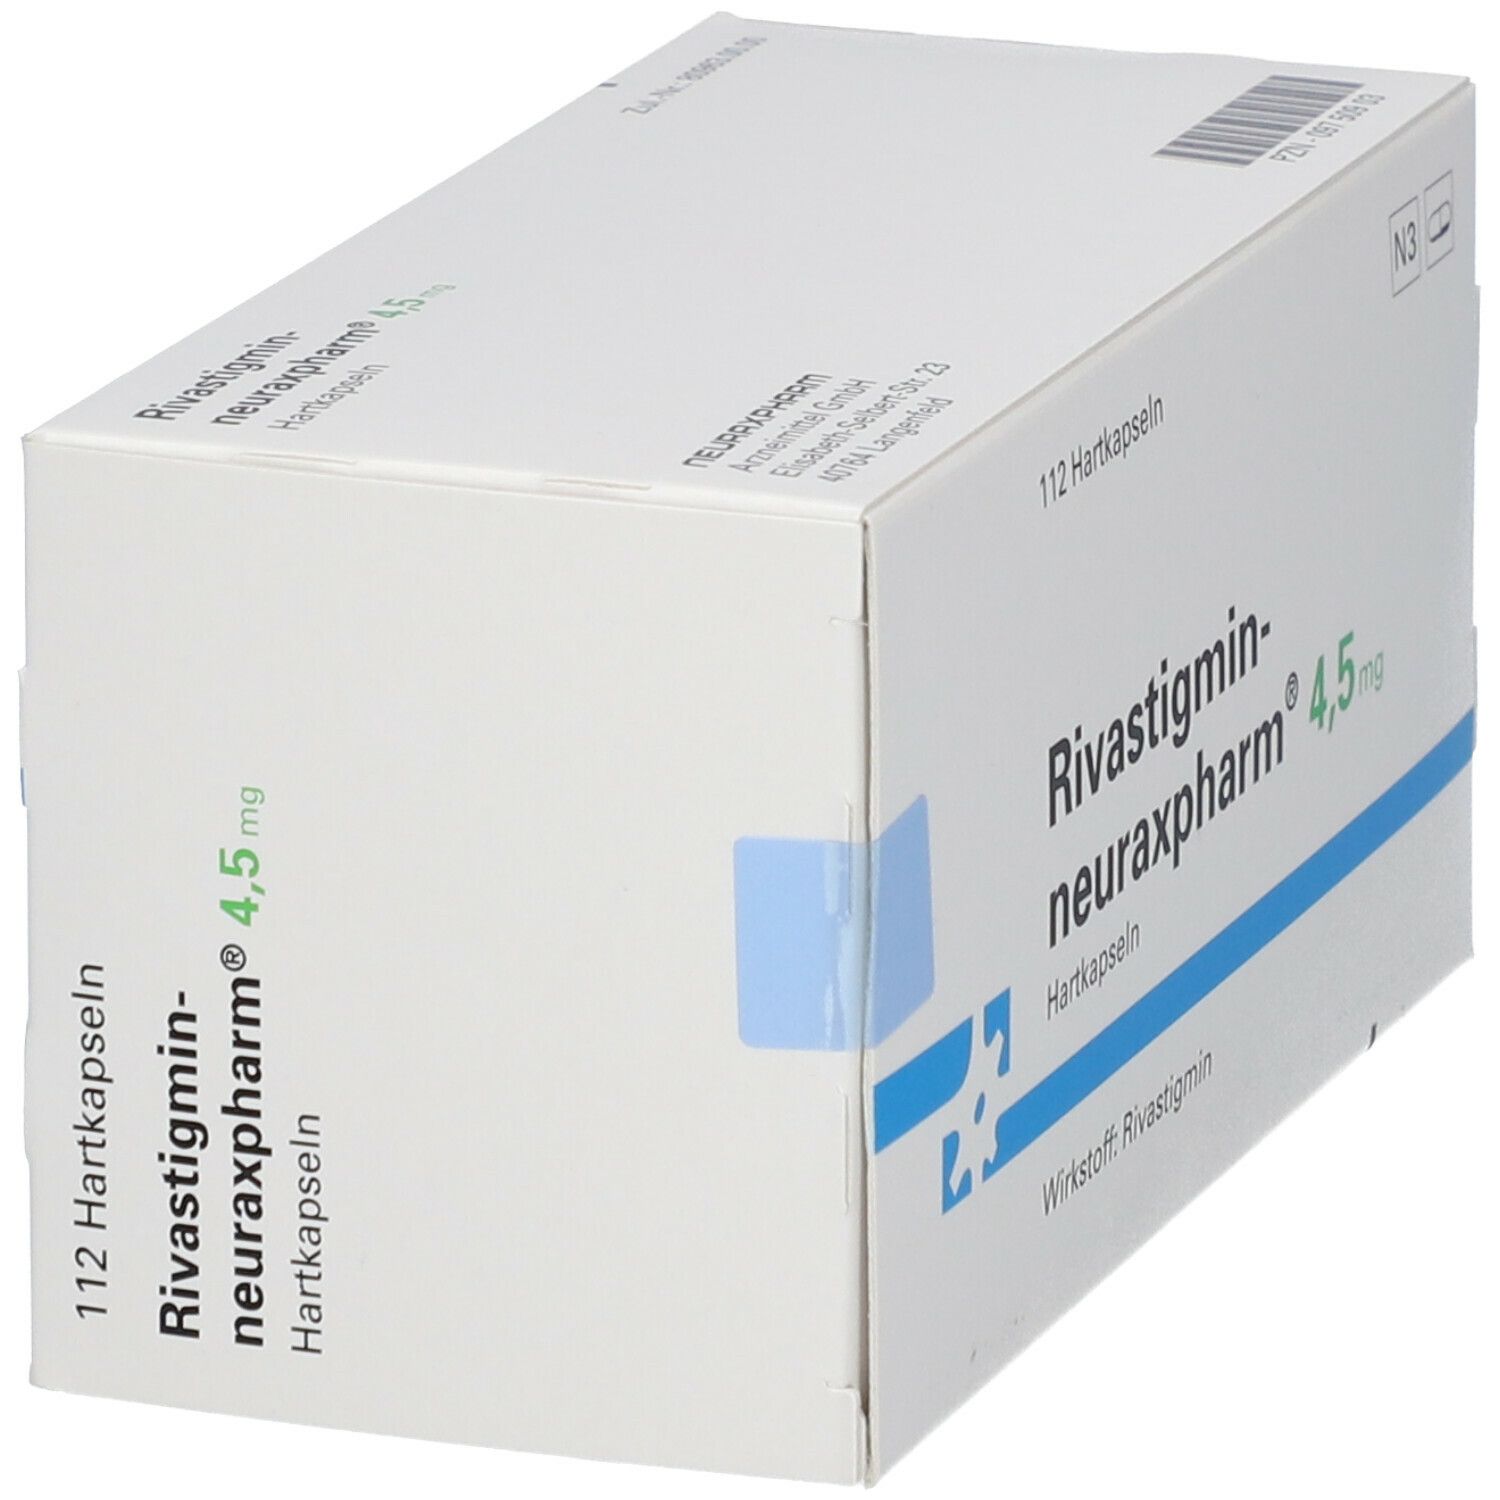 Rivastigmin-neuraxpharm® 4,5 mg